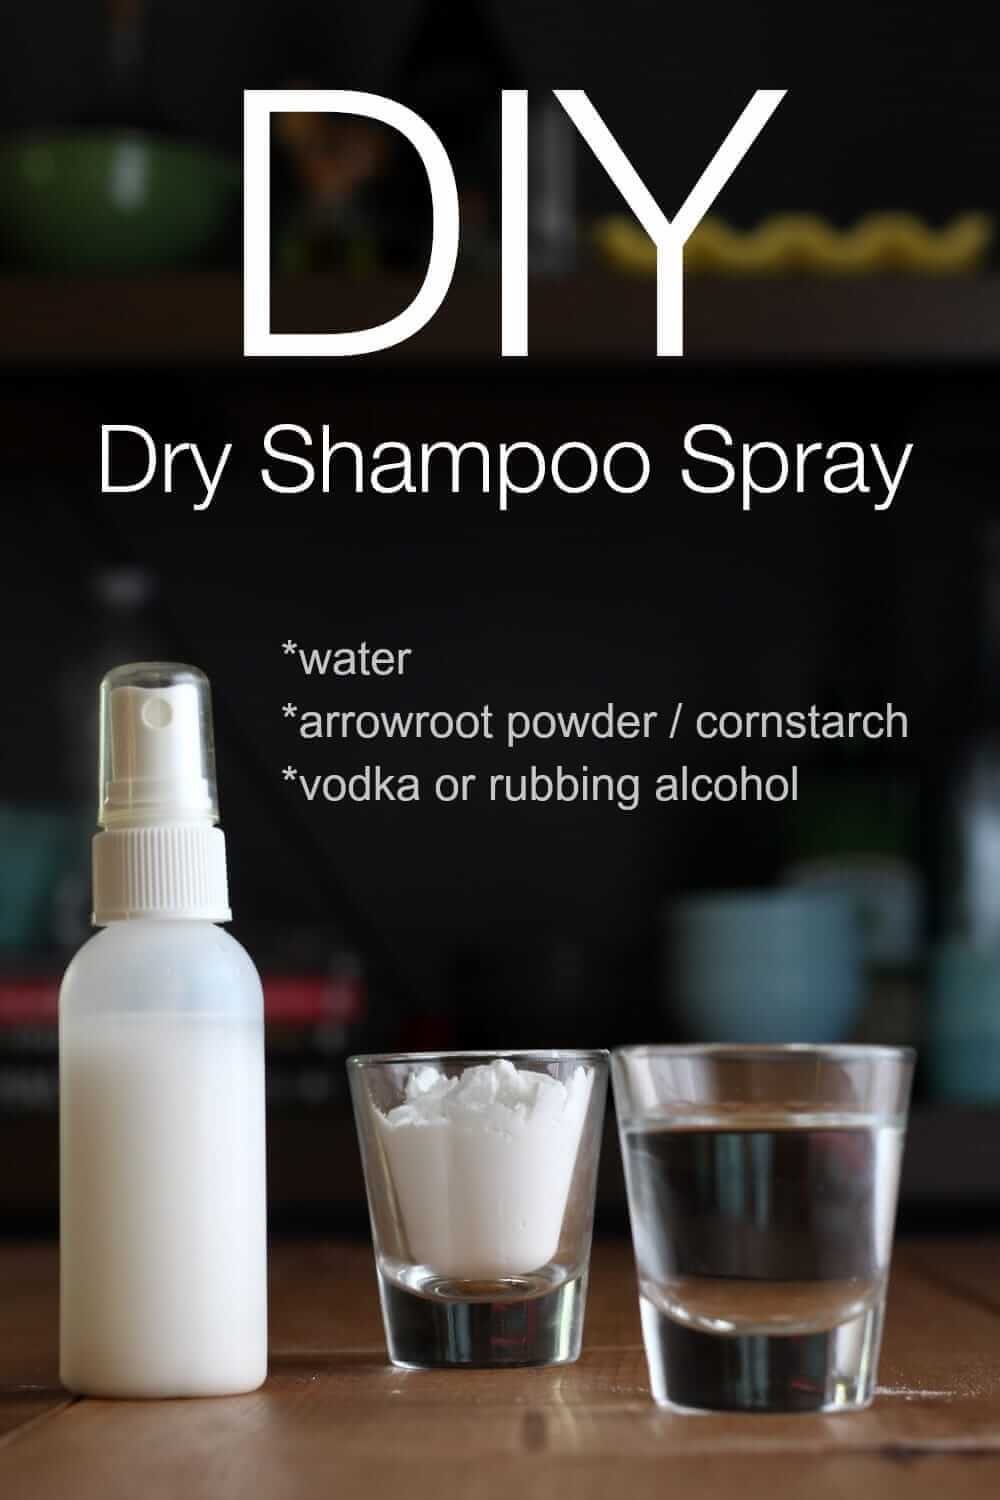 dry shampoo dry shampoo spray mommypotamus.